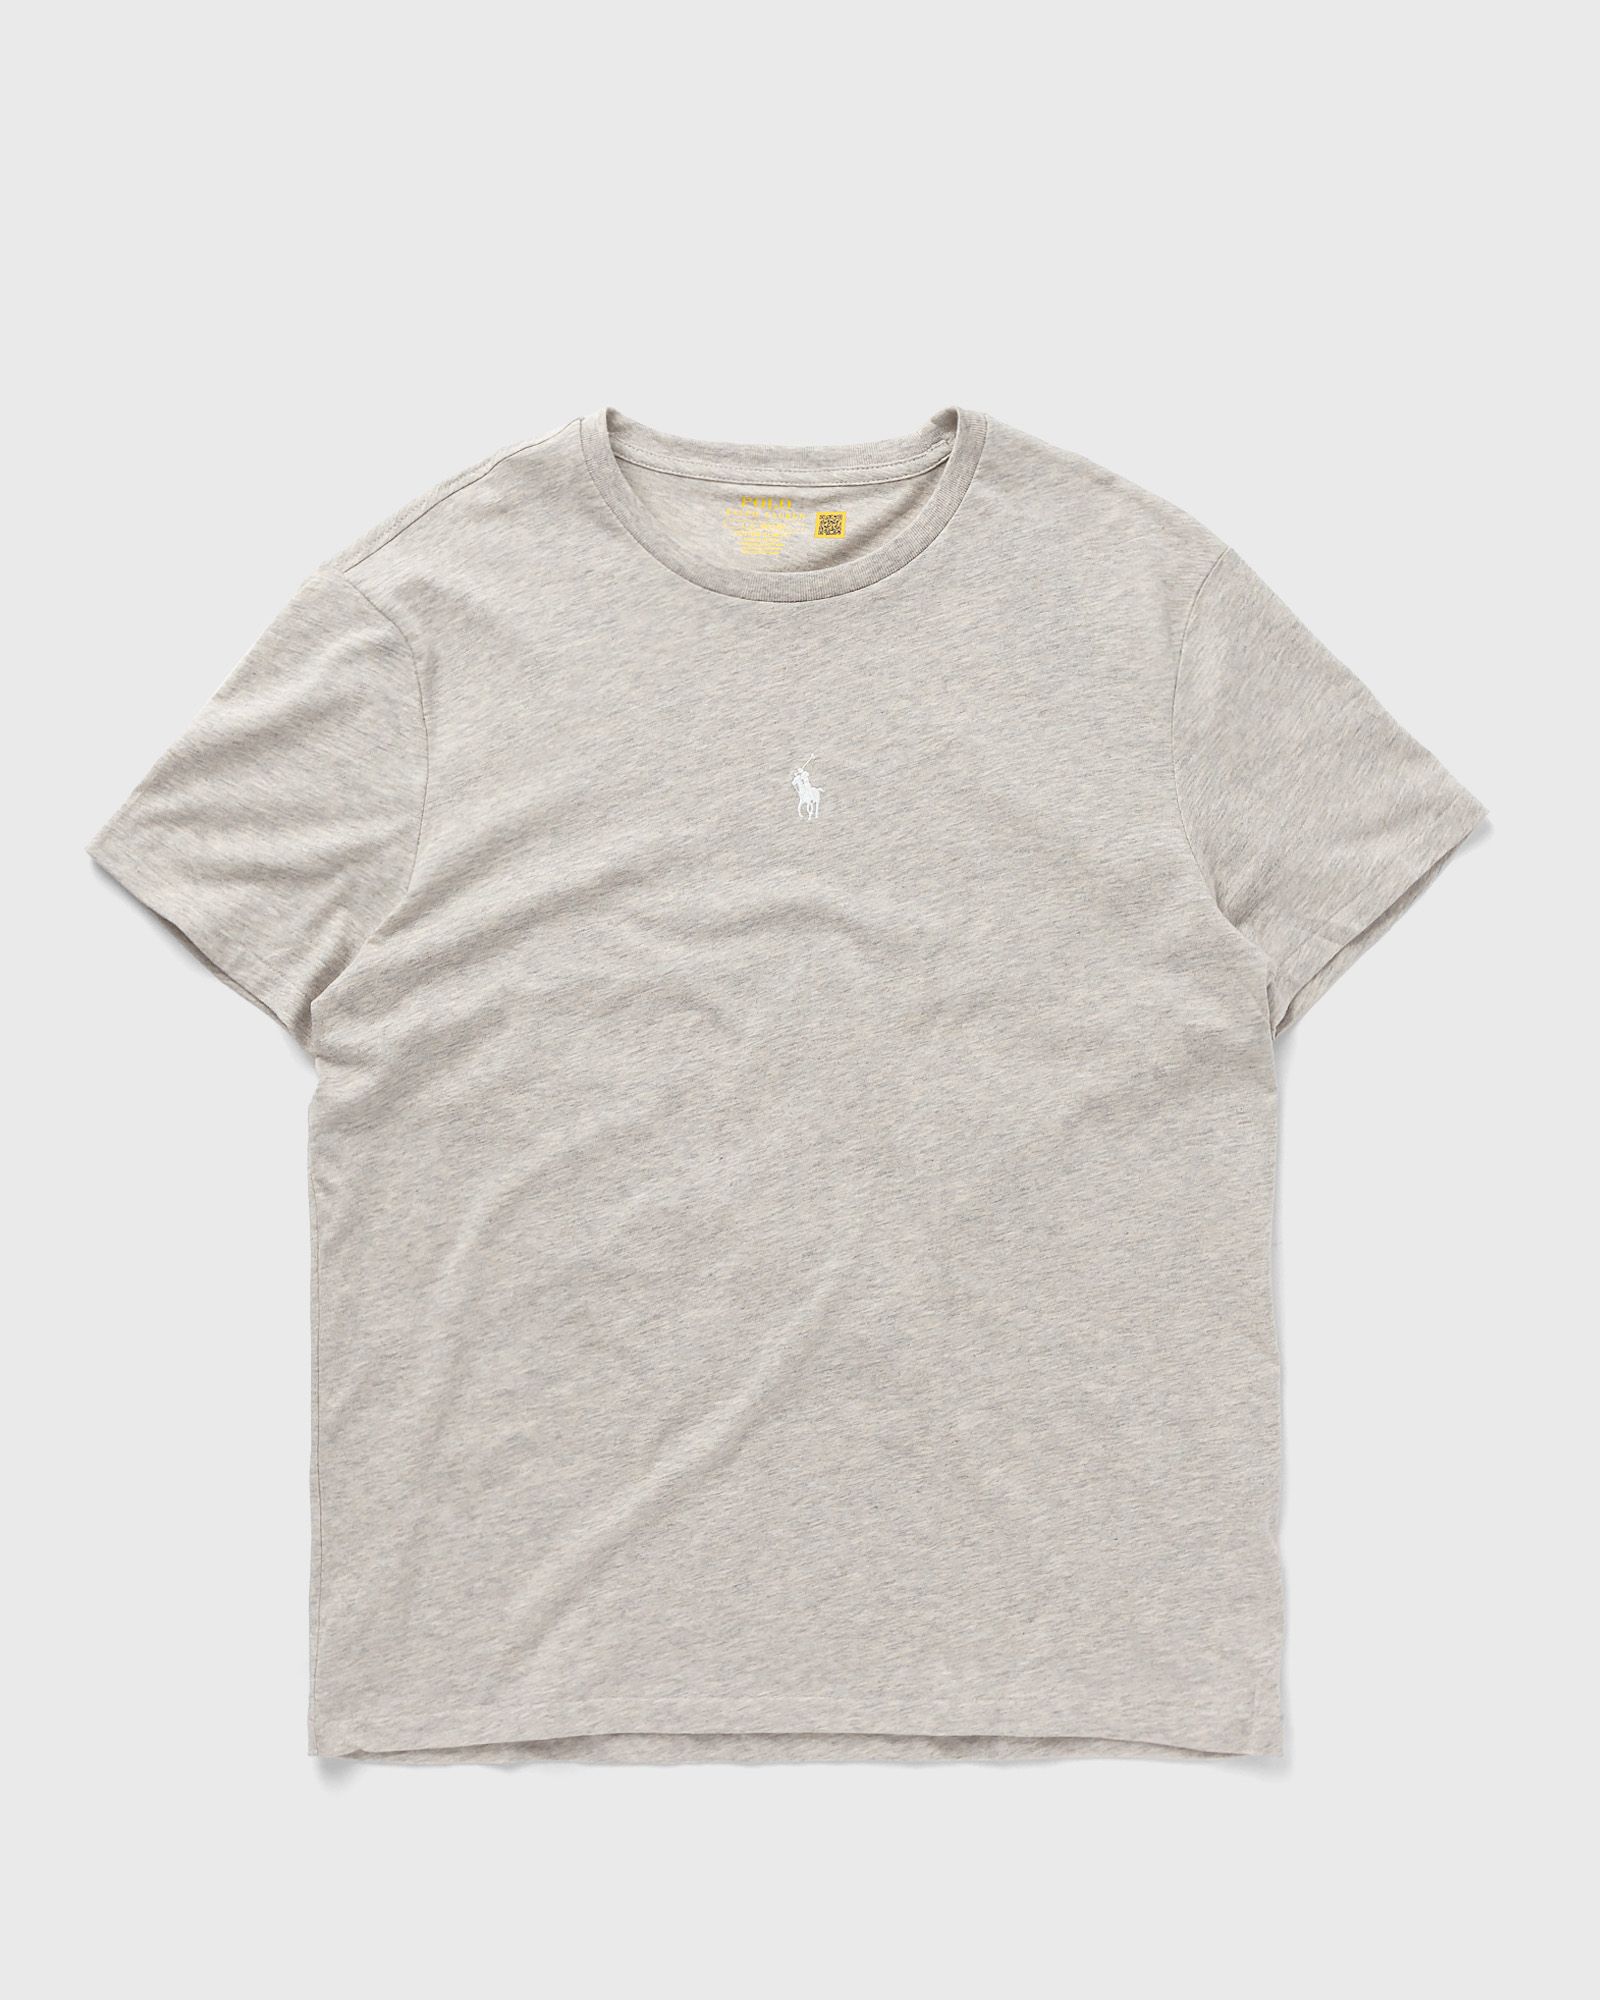 Polo Ralph Lauren - short sleeve-tee men shortsleeves grey in größe:xl